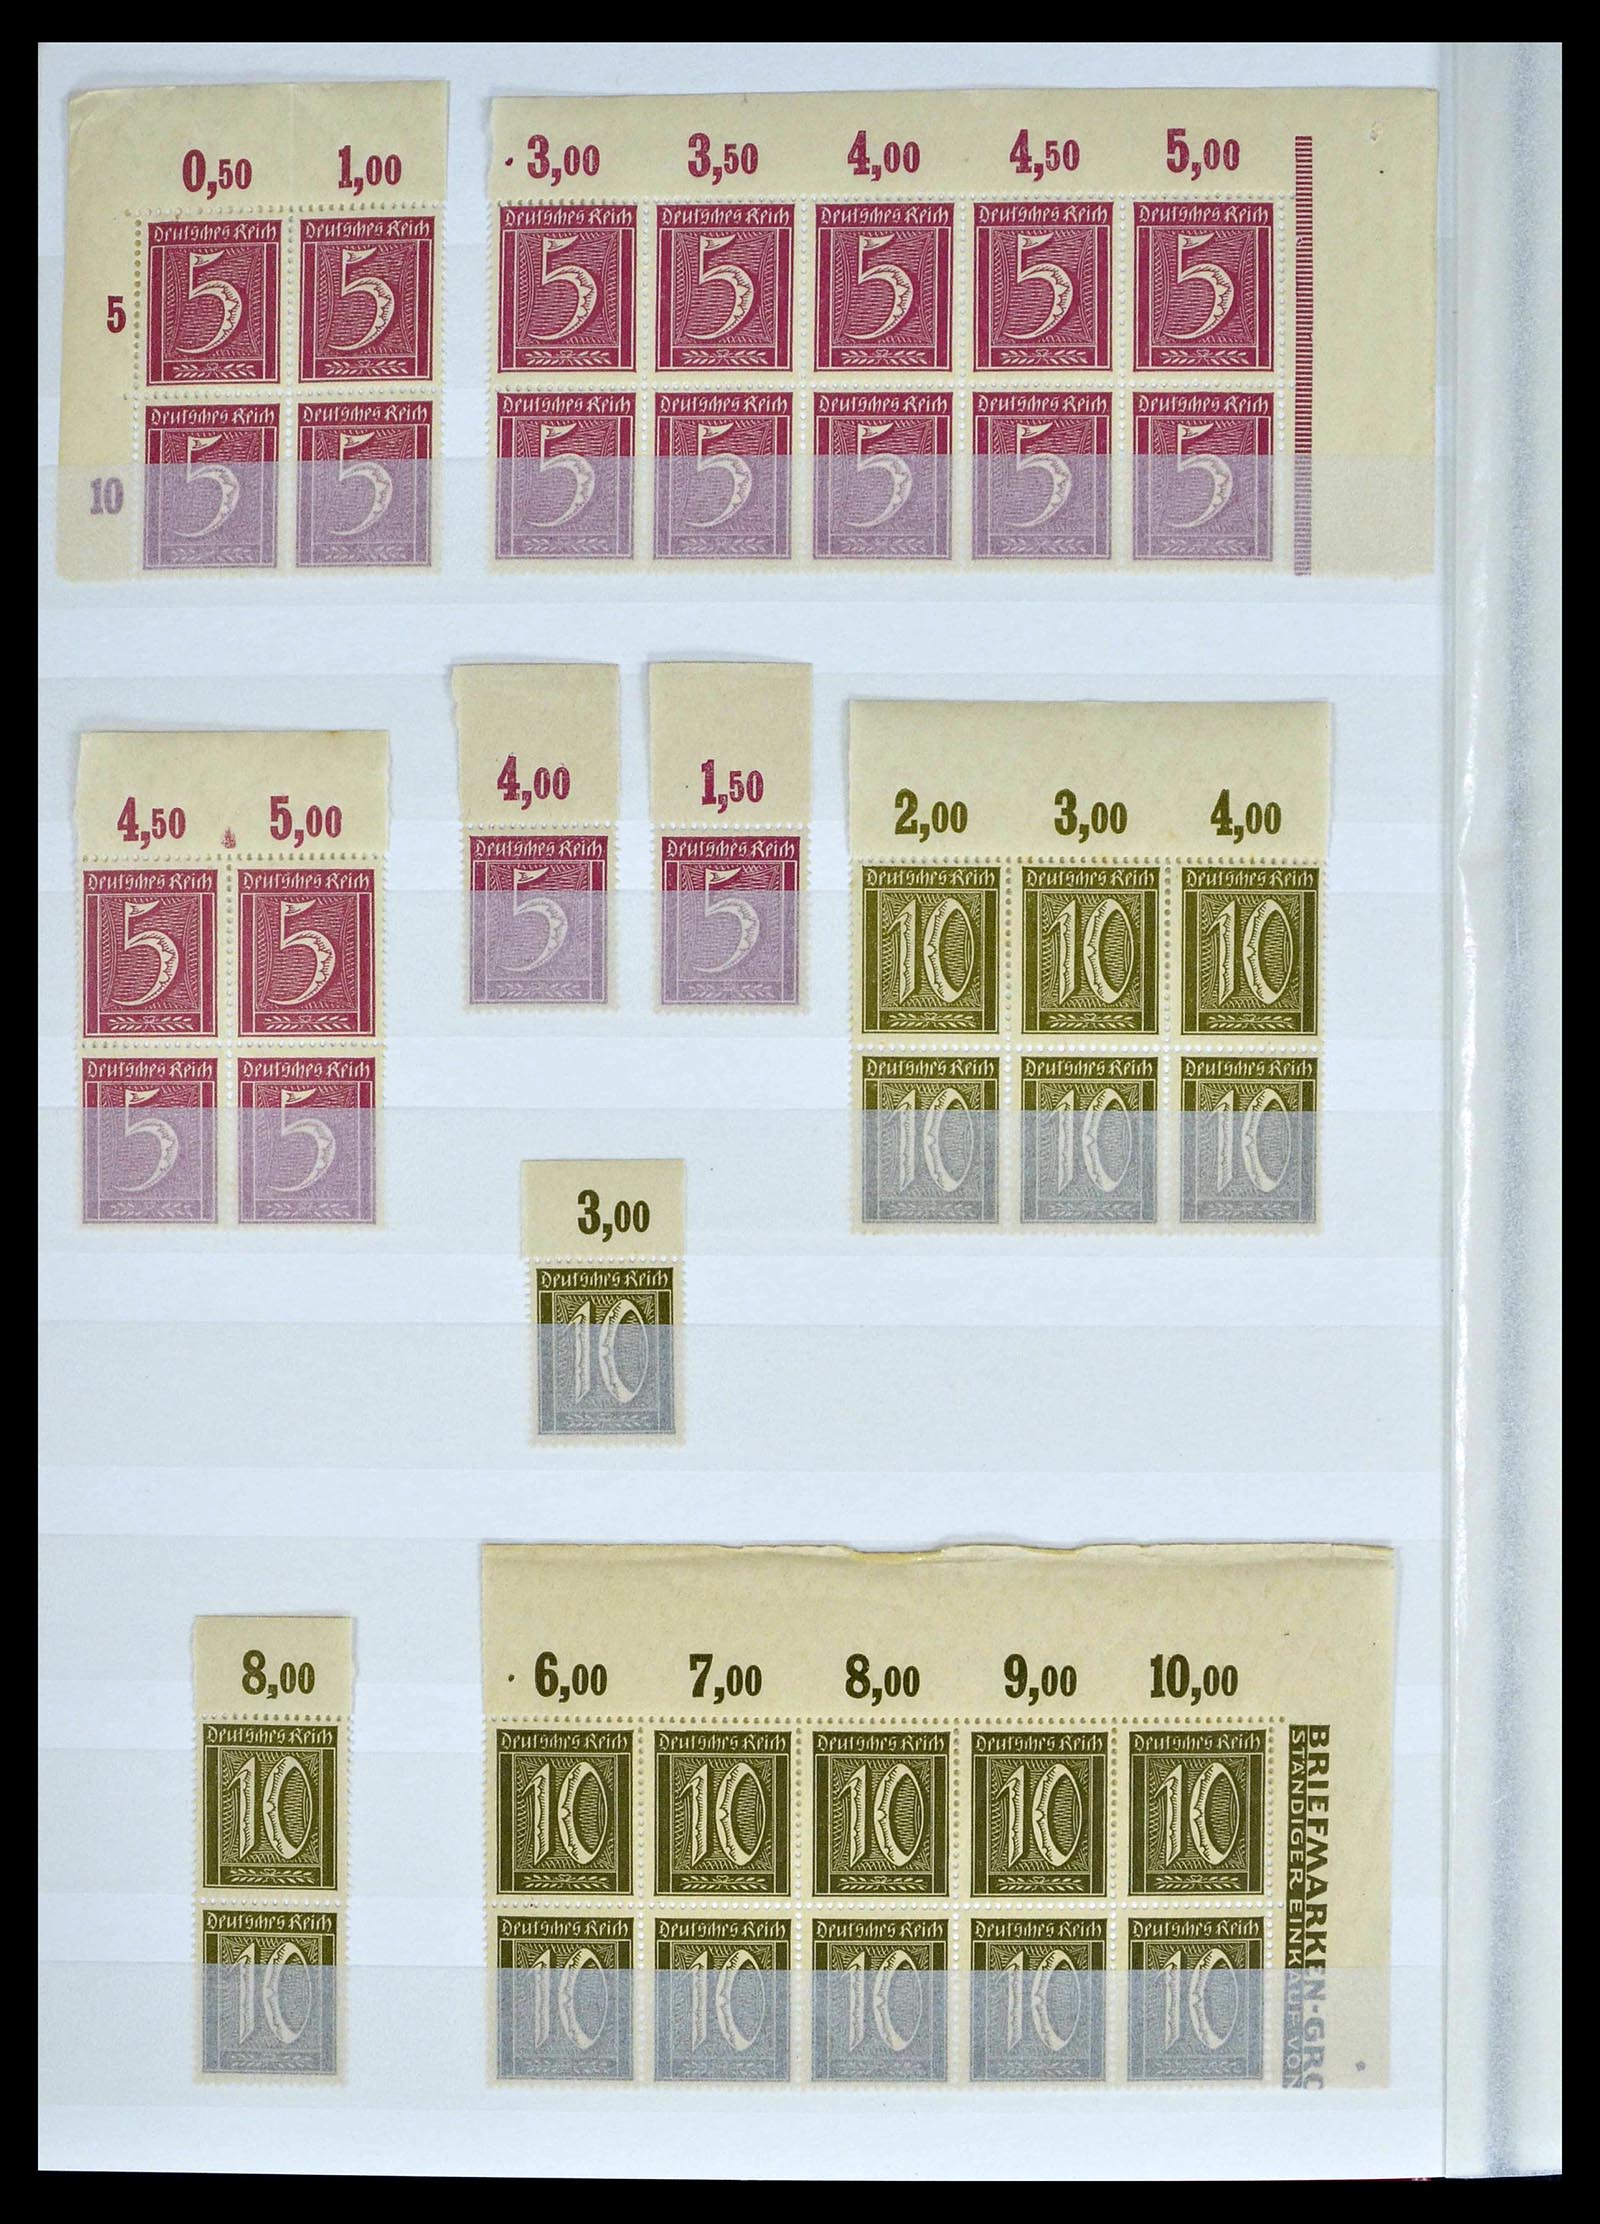 39254 0008 - Stamp collection 39254 German Reich MNH top margins.